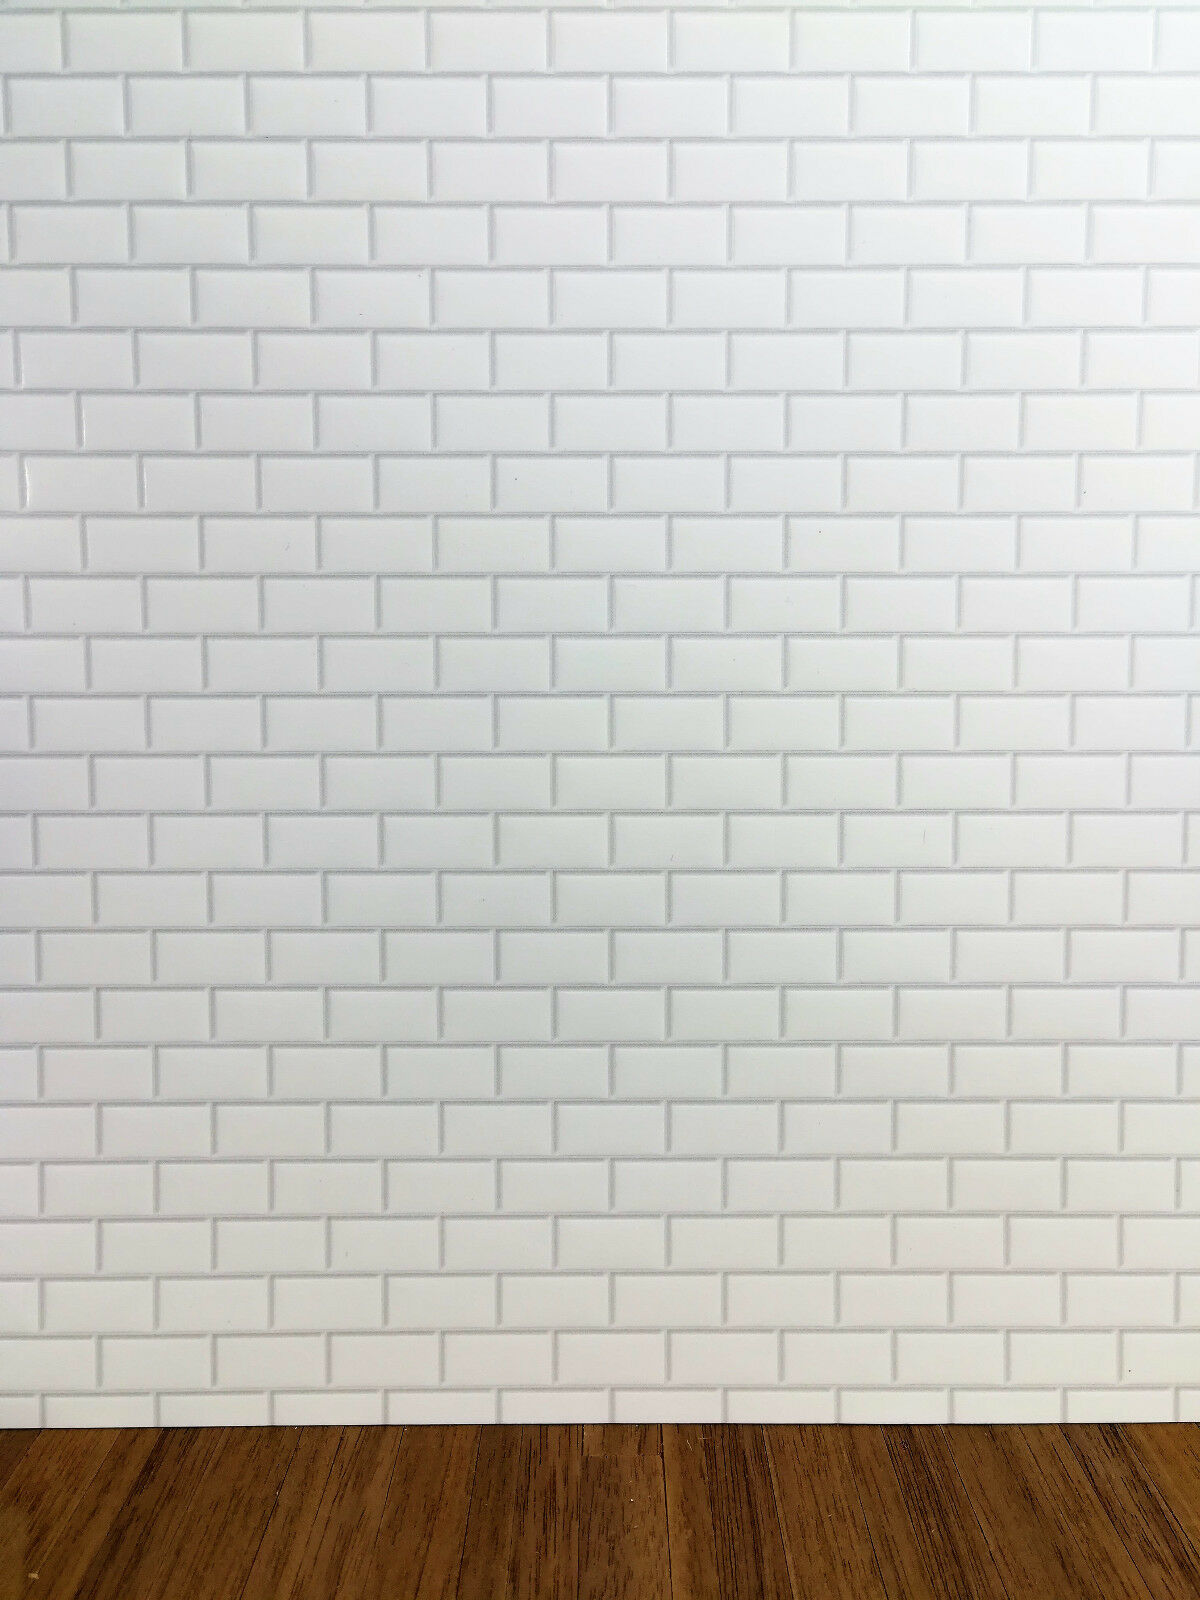 Dollhouse Miniature White Subway Metro Wall Tile Textured Gloss Paper 1:12 Scale